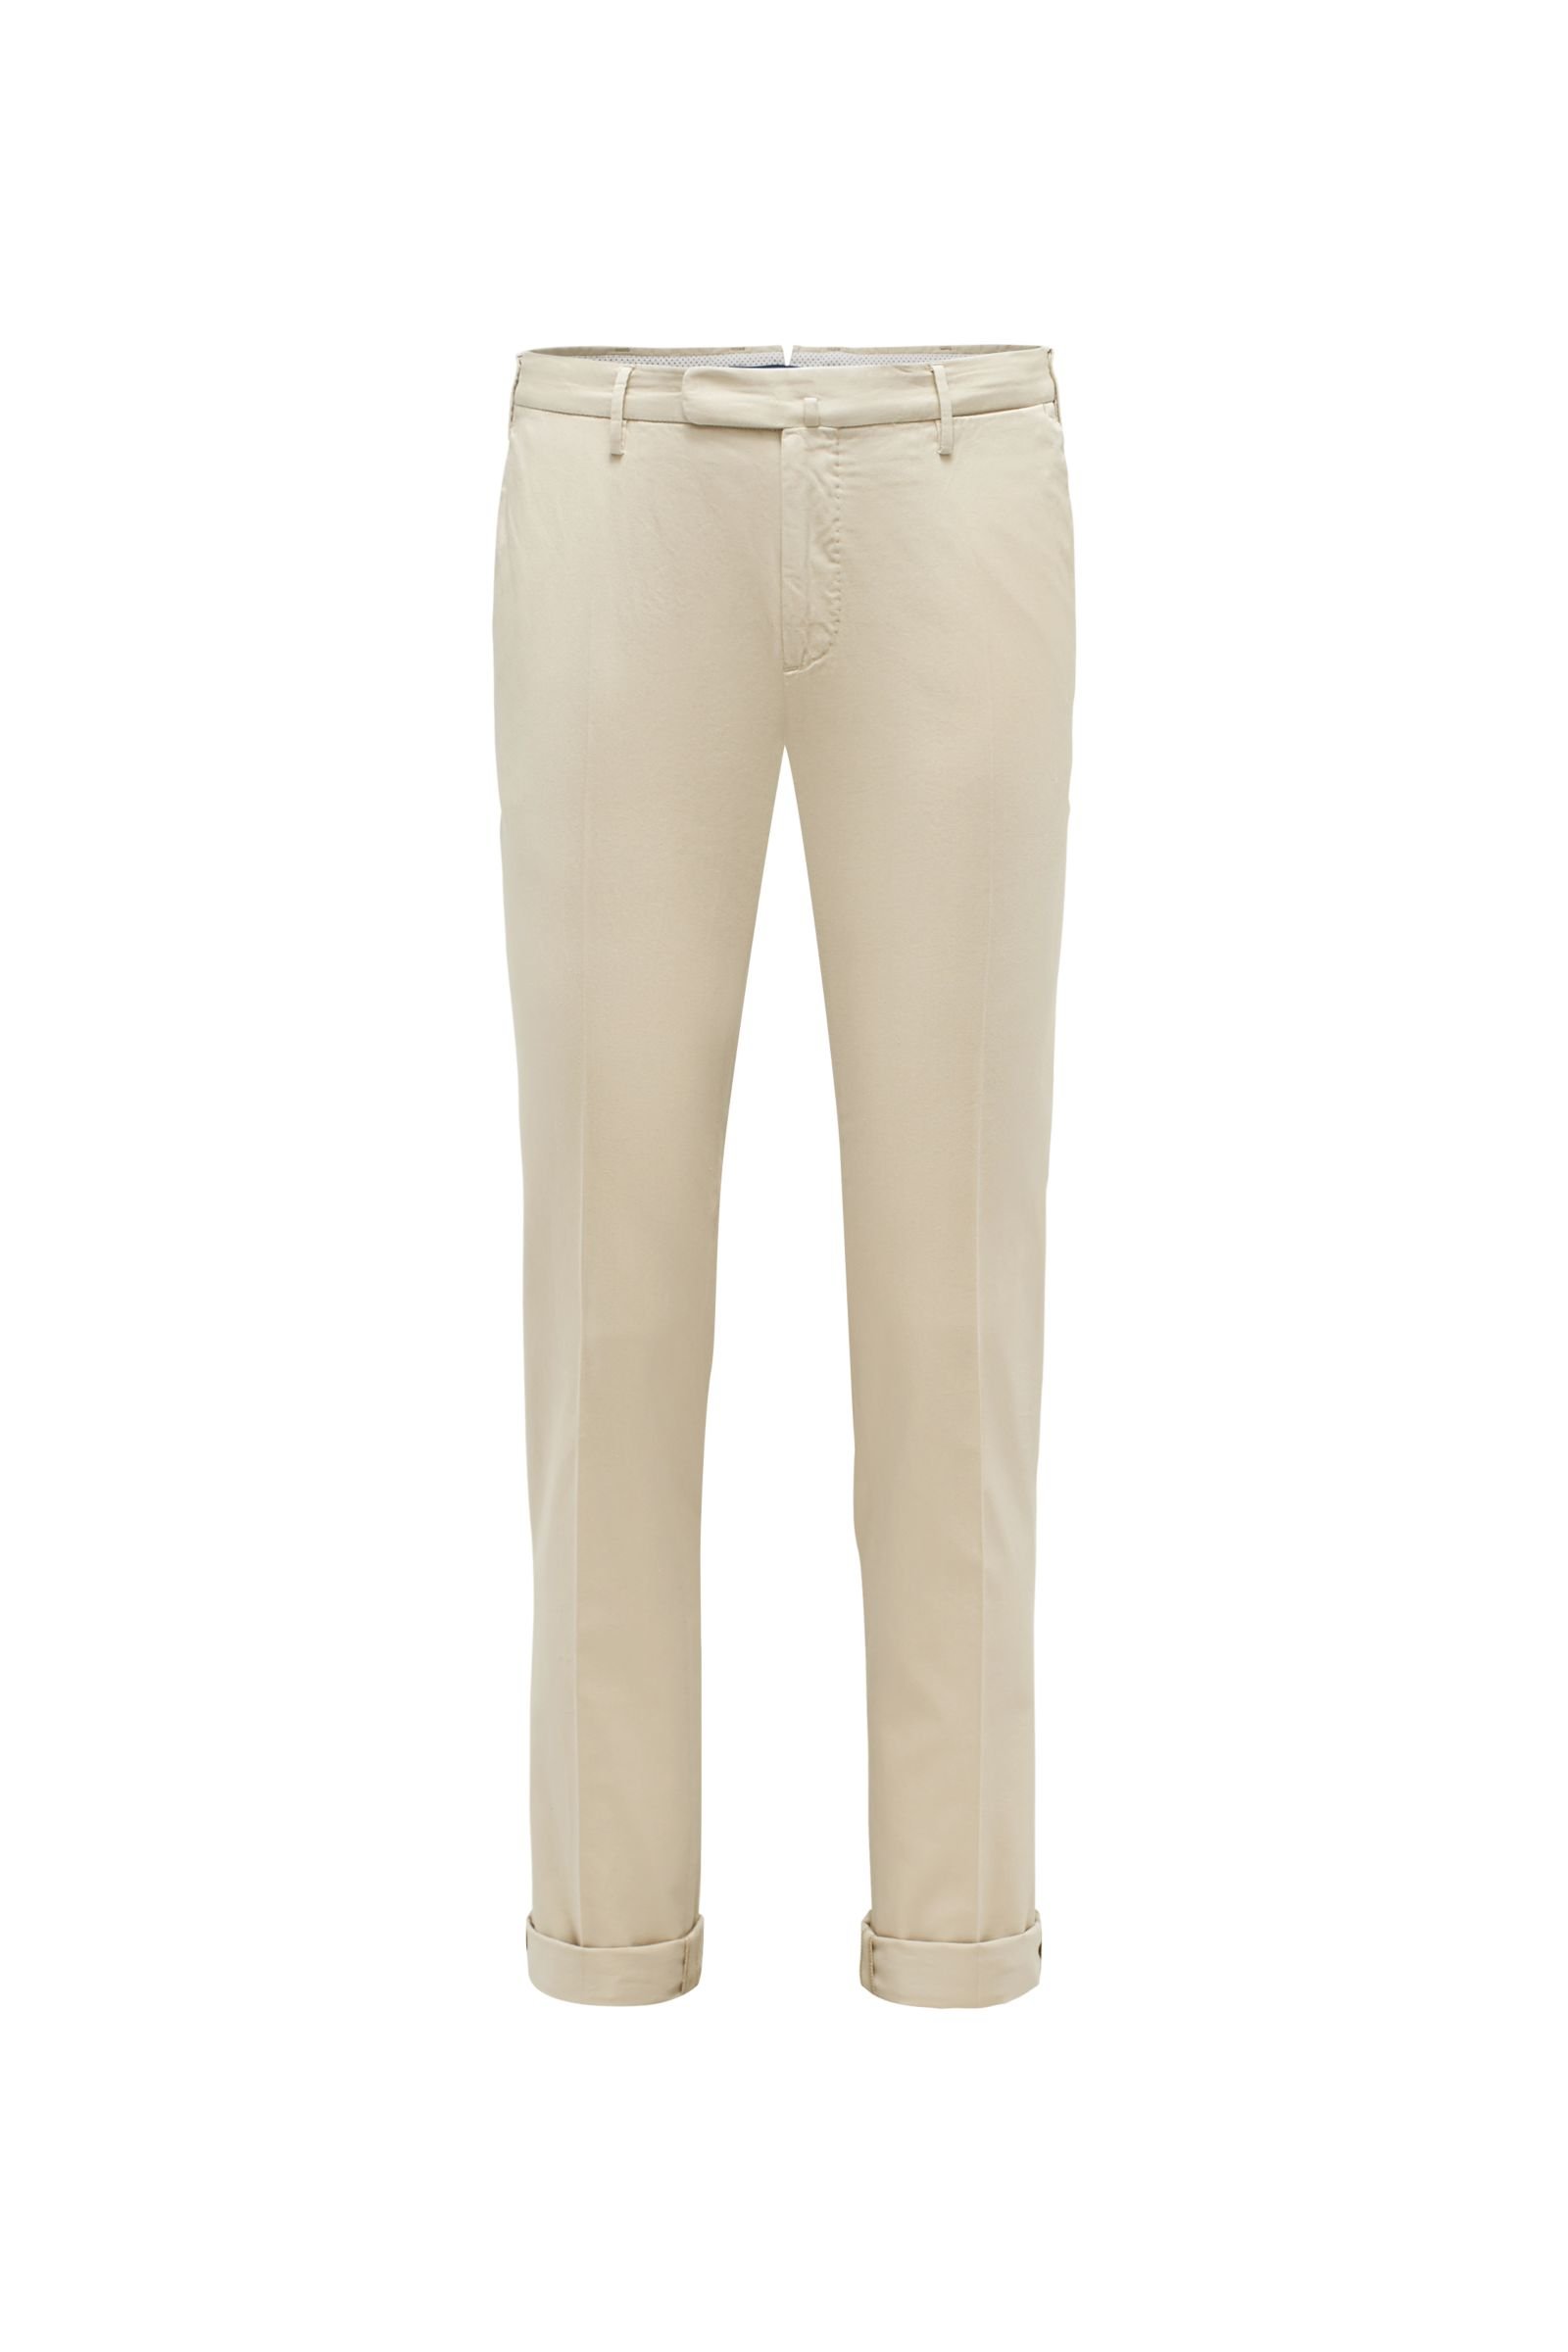 Cotton trousers beige